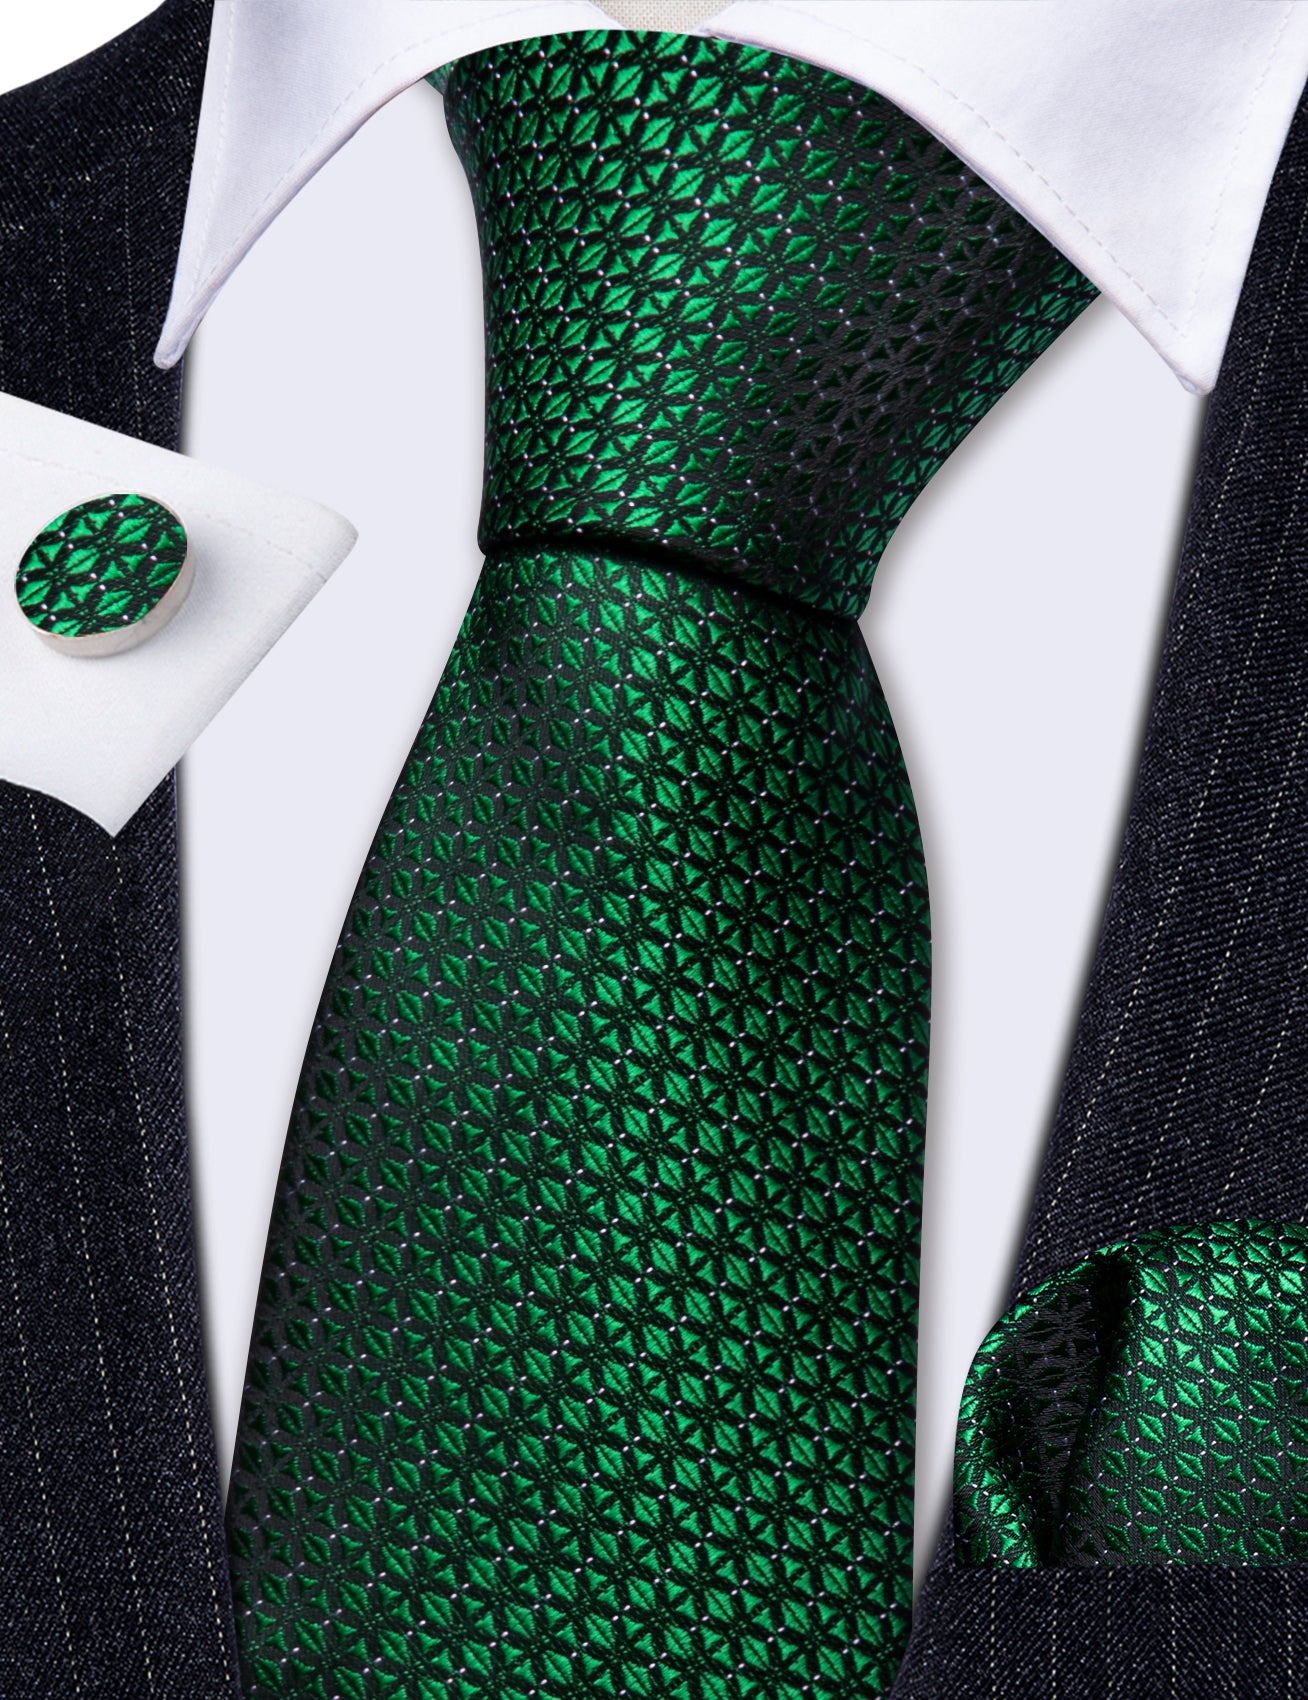  Novetly Green Plaid Silk Tie Handkerchief Cufflinks Set